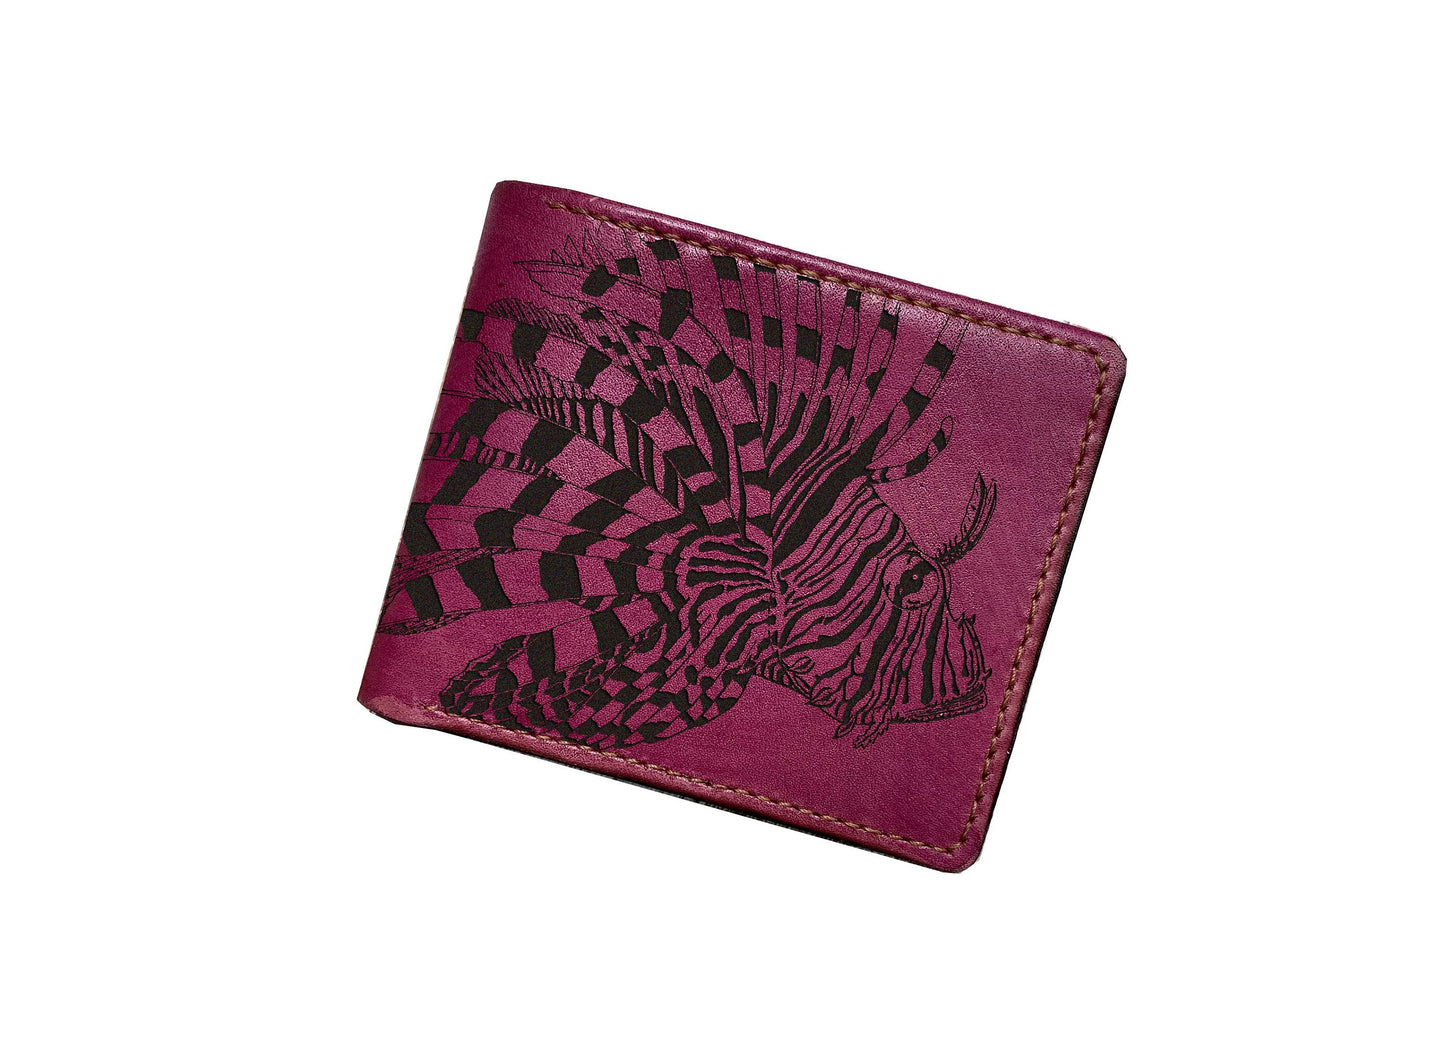 Customized leather men's wallet, bifold ID card wallet, Lionfish art wallet, animal pattern present for men, ocean fish men gift